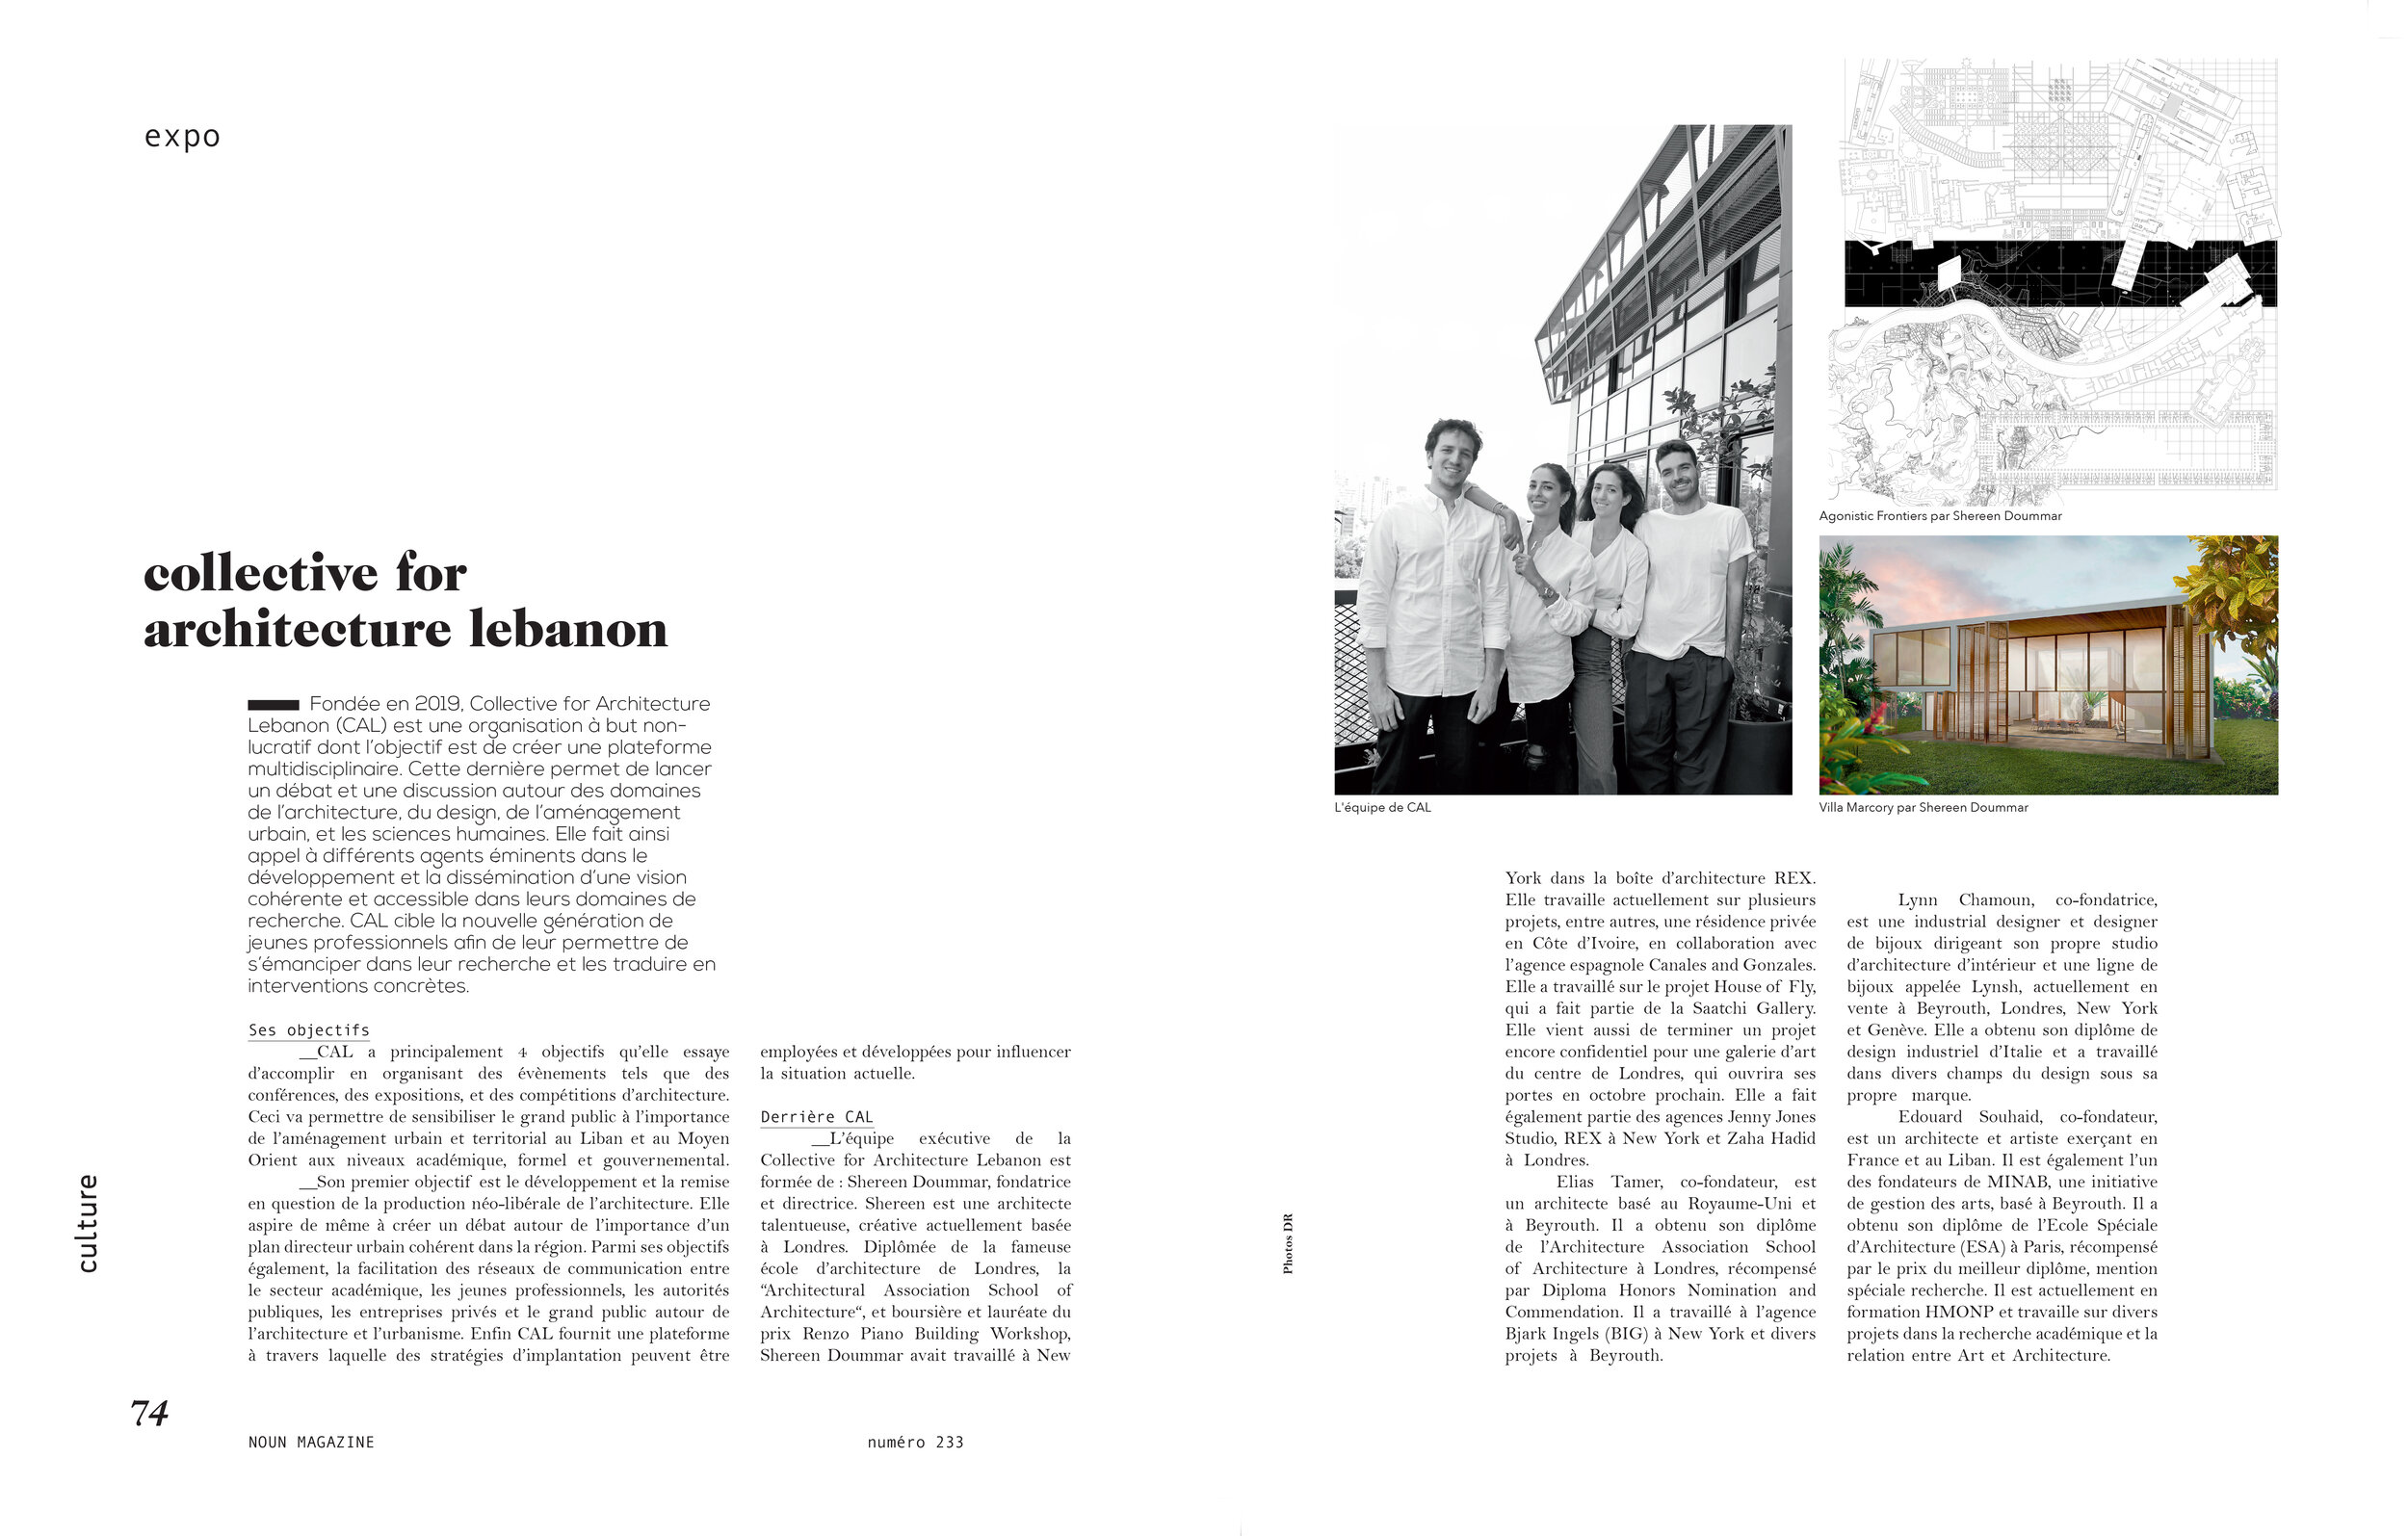 Noun Magazine - Article about CAL